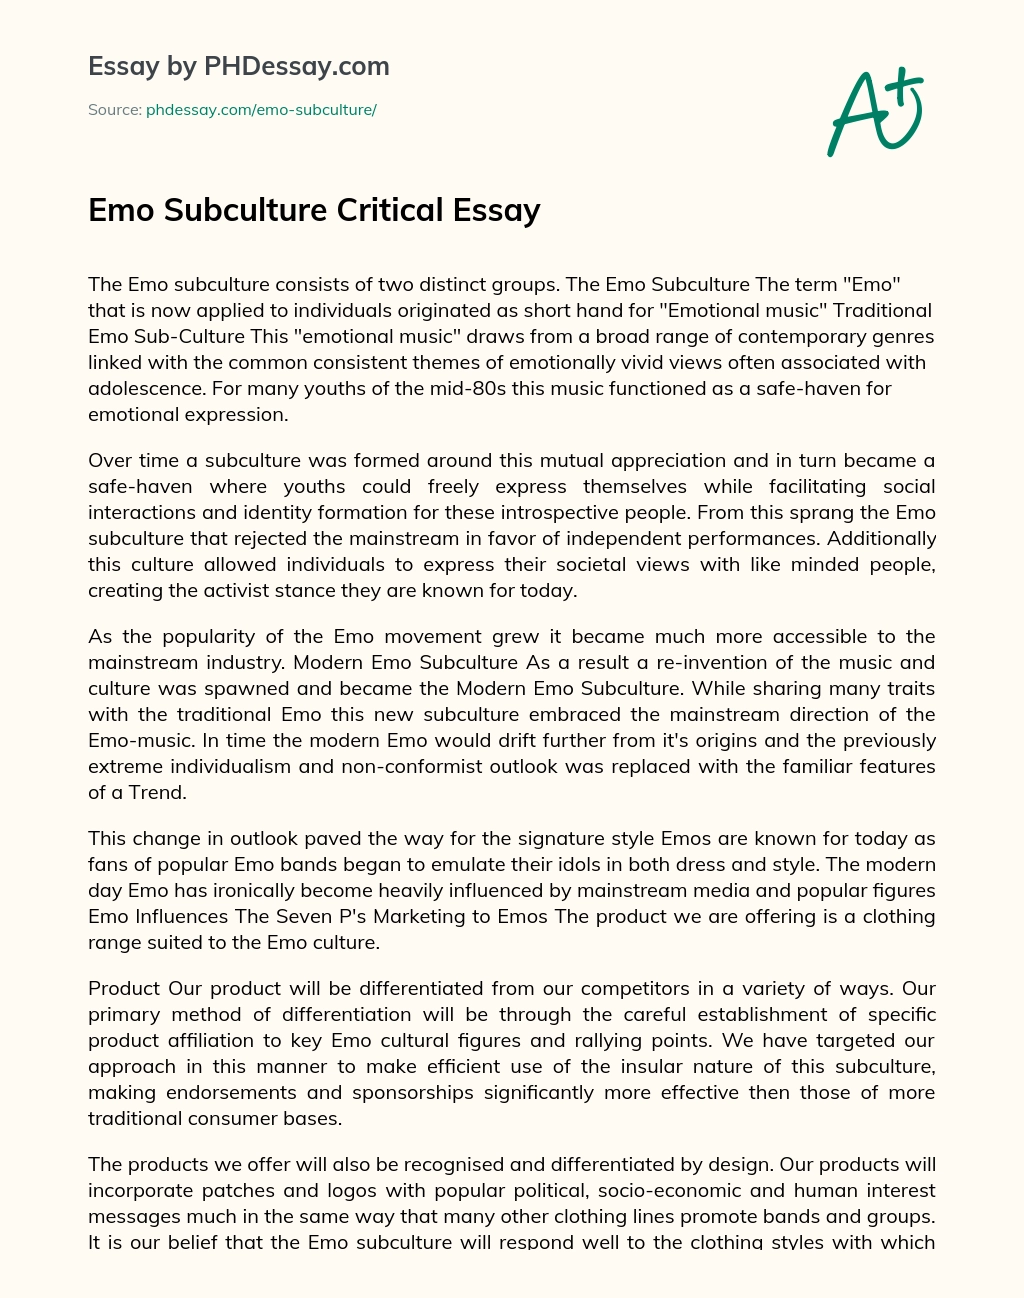 Emo Subculture Critical Essay essay